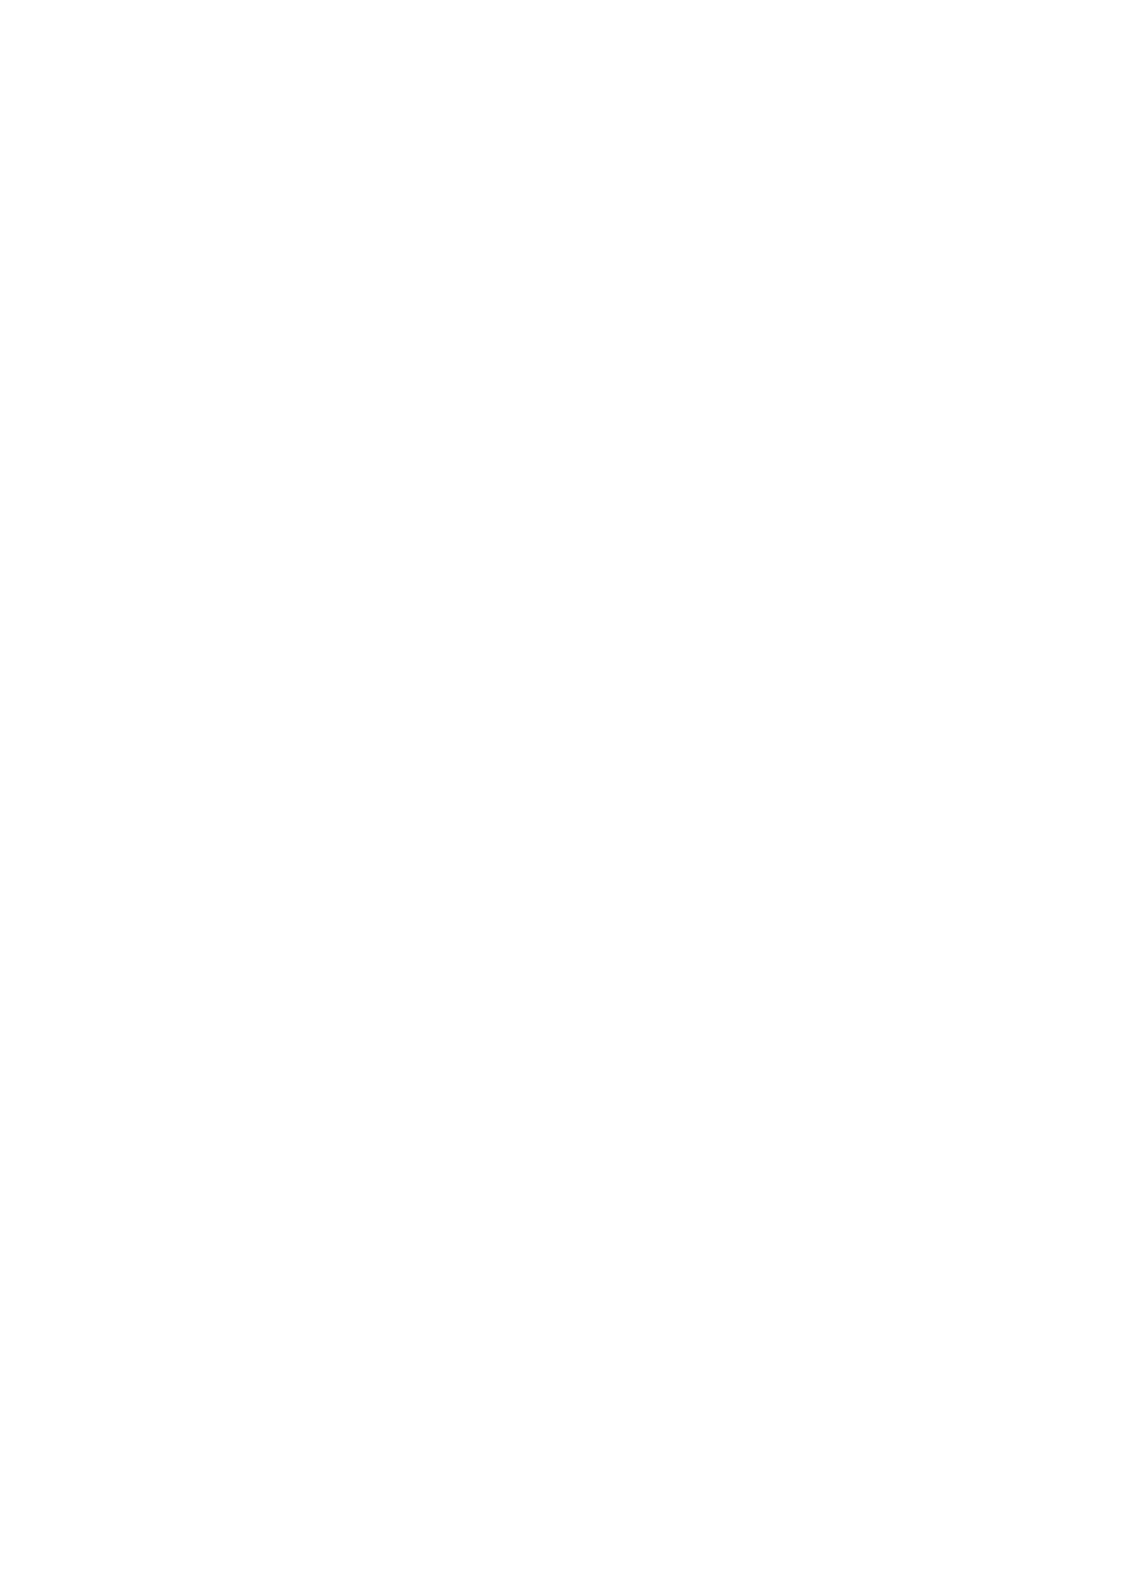 Sydbank A/S logo for dark backgrounds (transparent PNG)